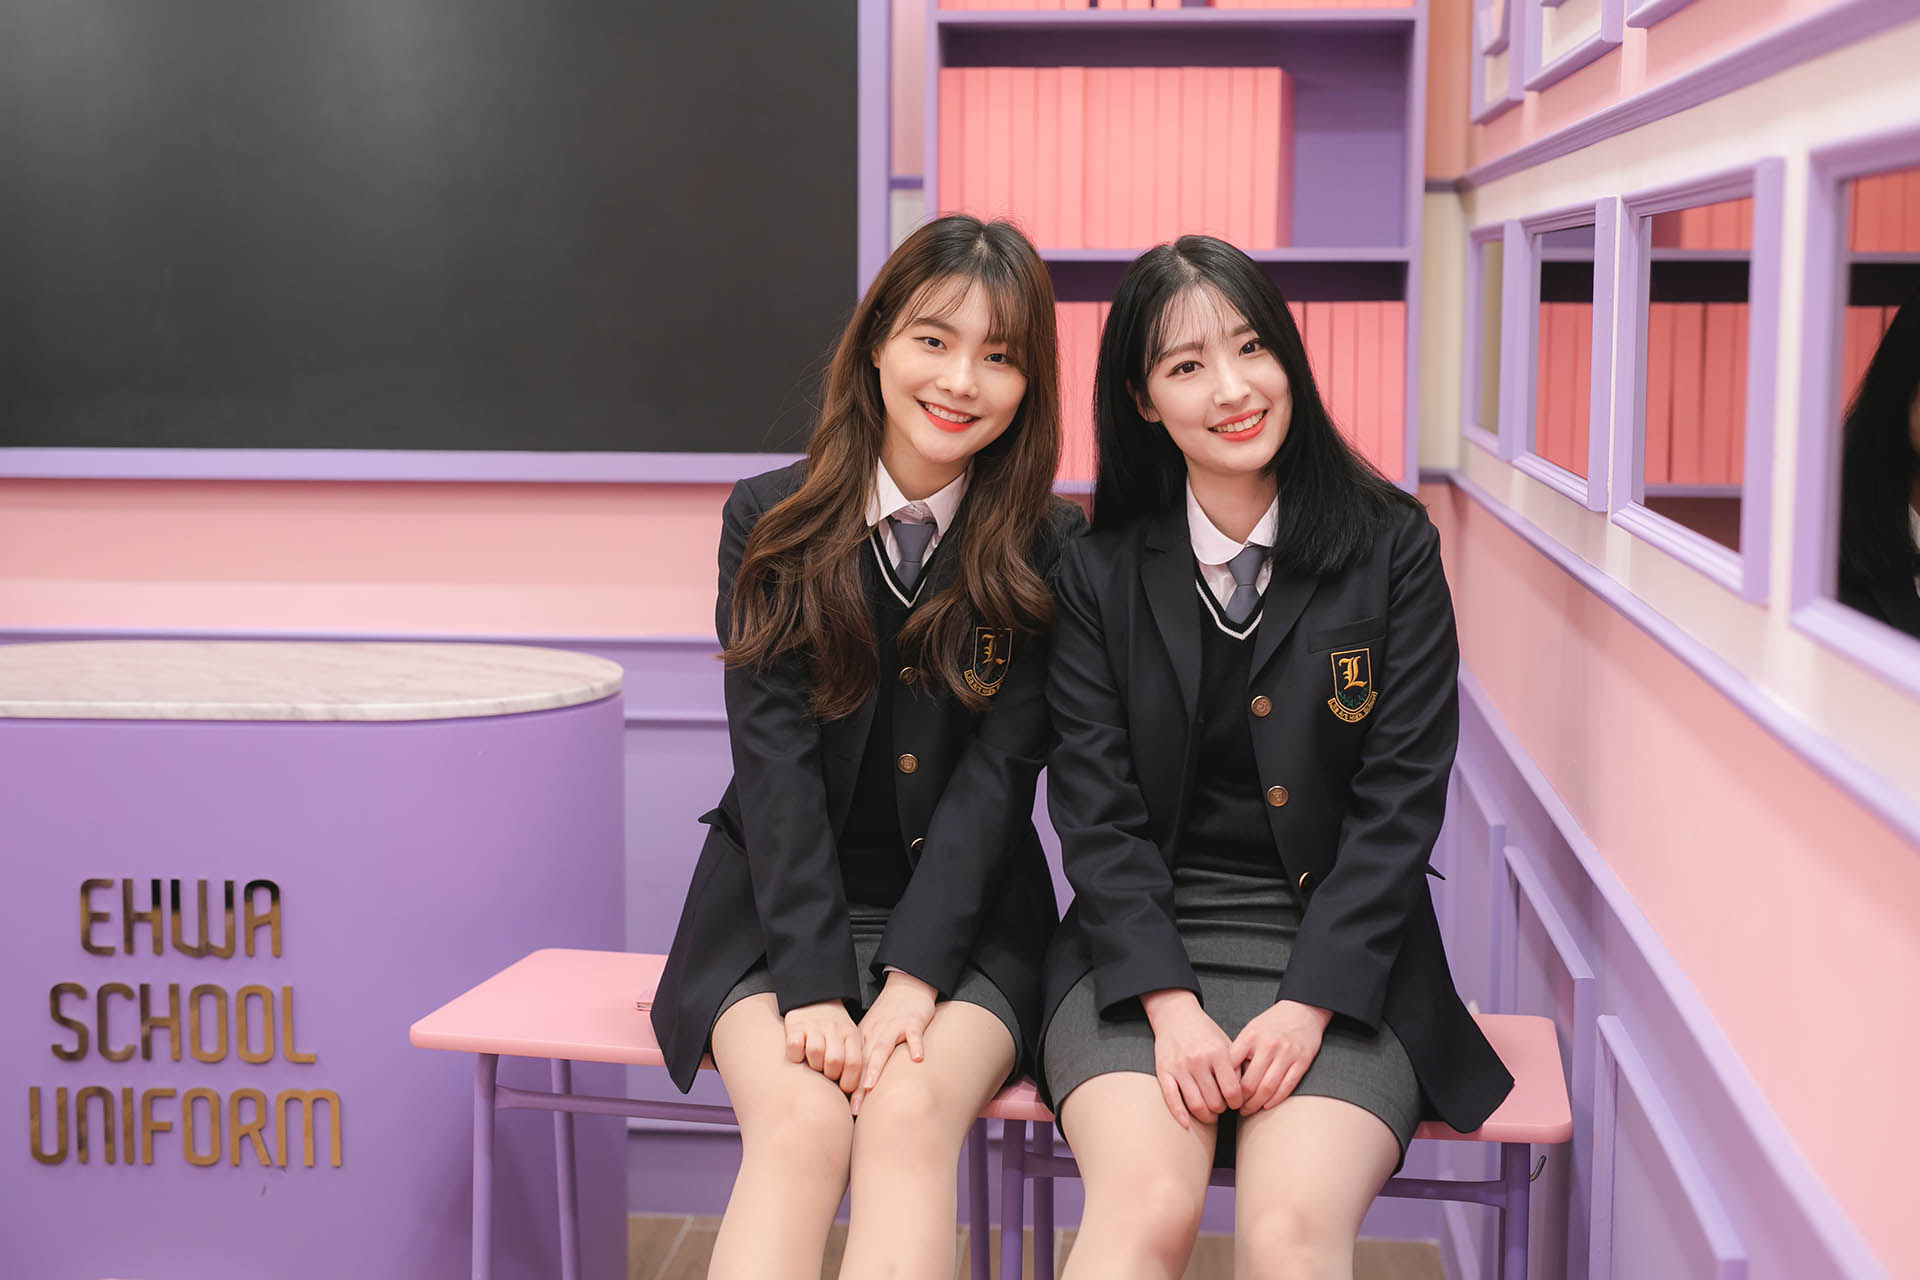 Korean School Uniform Rental getting a hot trend